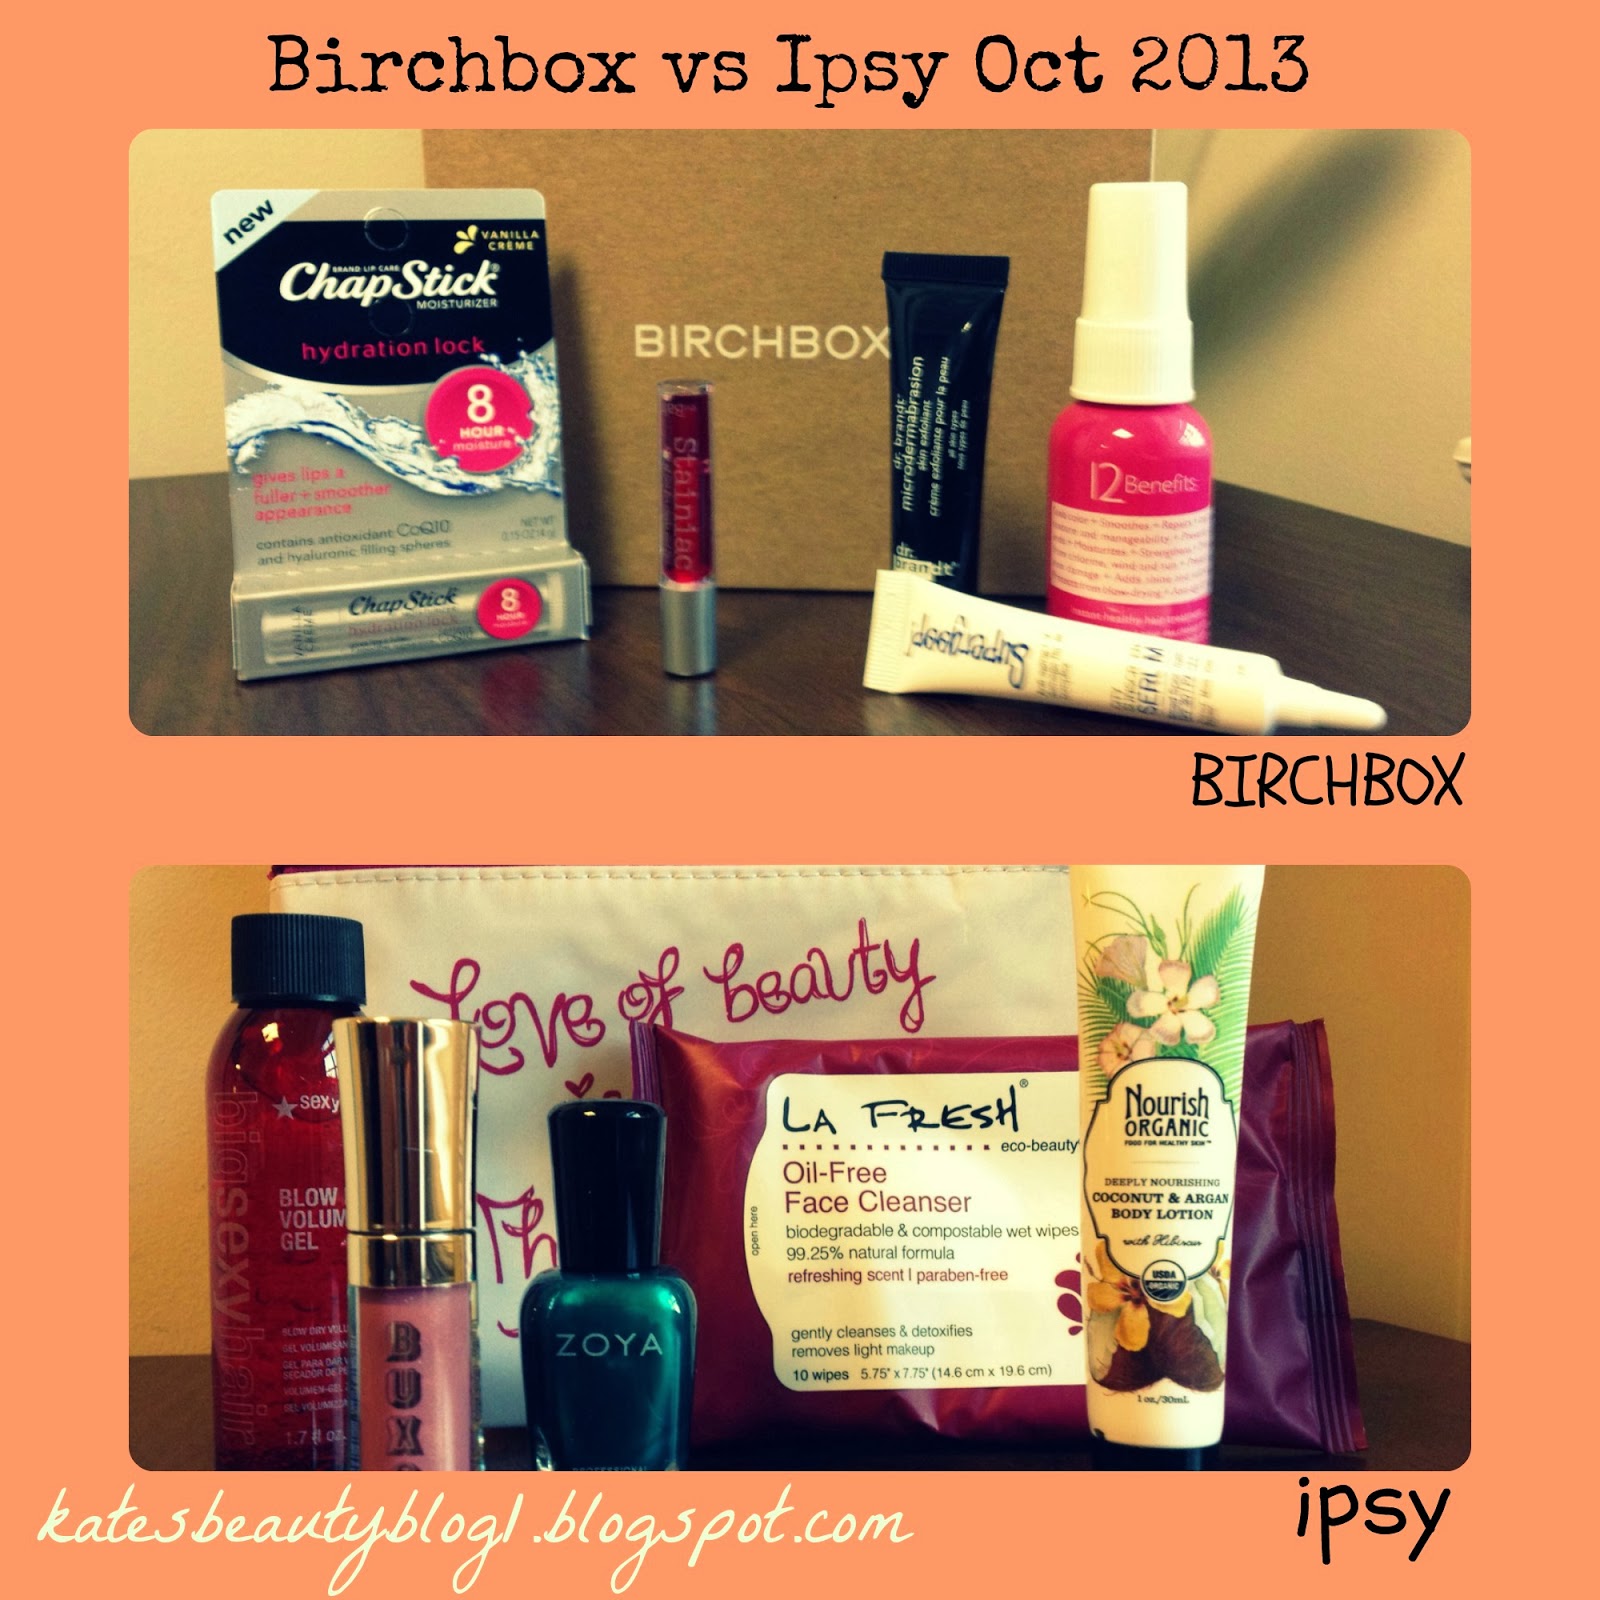 Kate39;s Beauty Blog: Birchbox vs. Ipsy October 2013